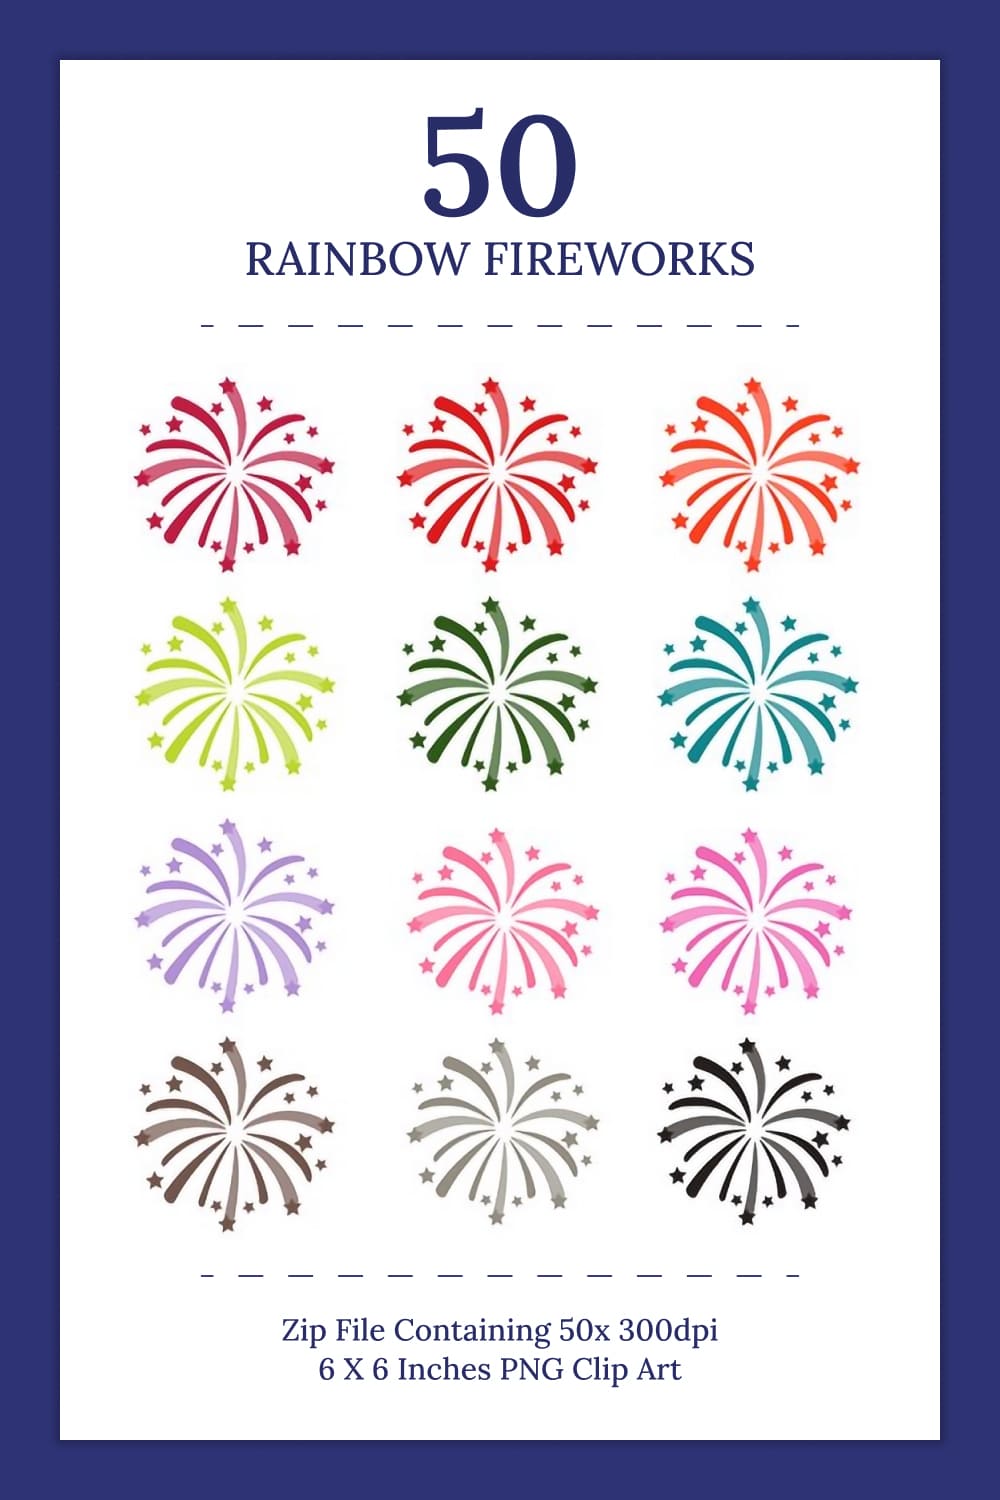 50 Rainbow Fireworks Clip Art - pinterest image preview.